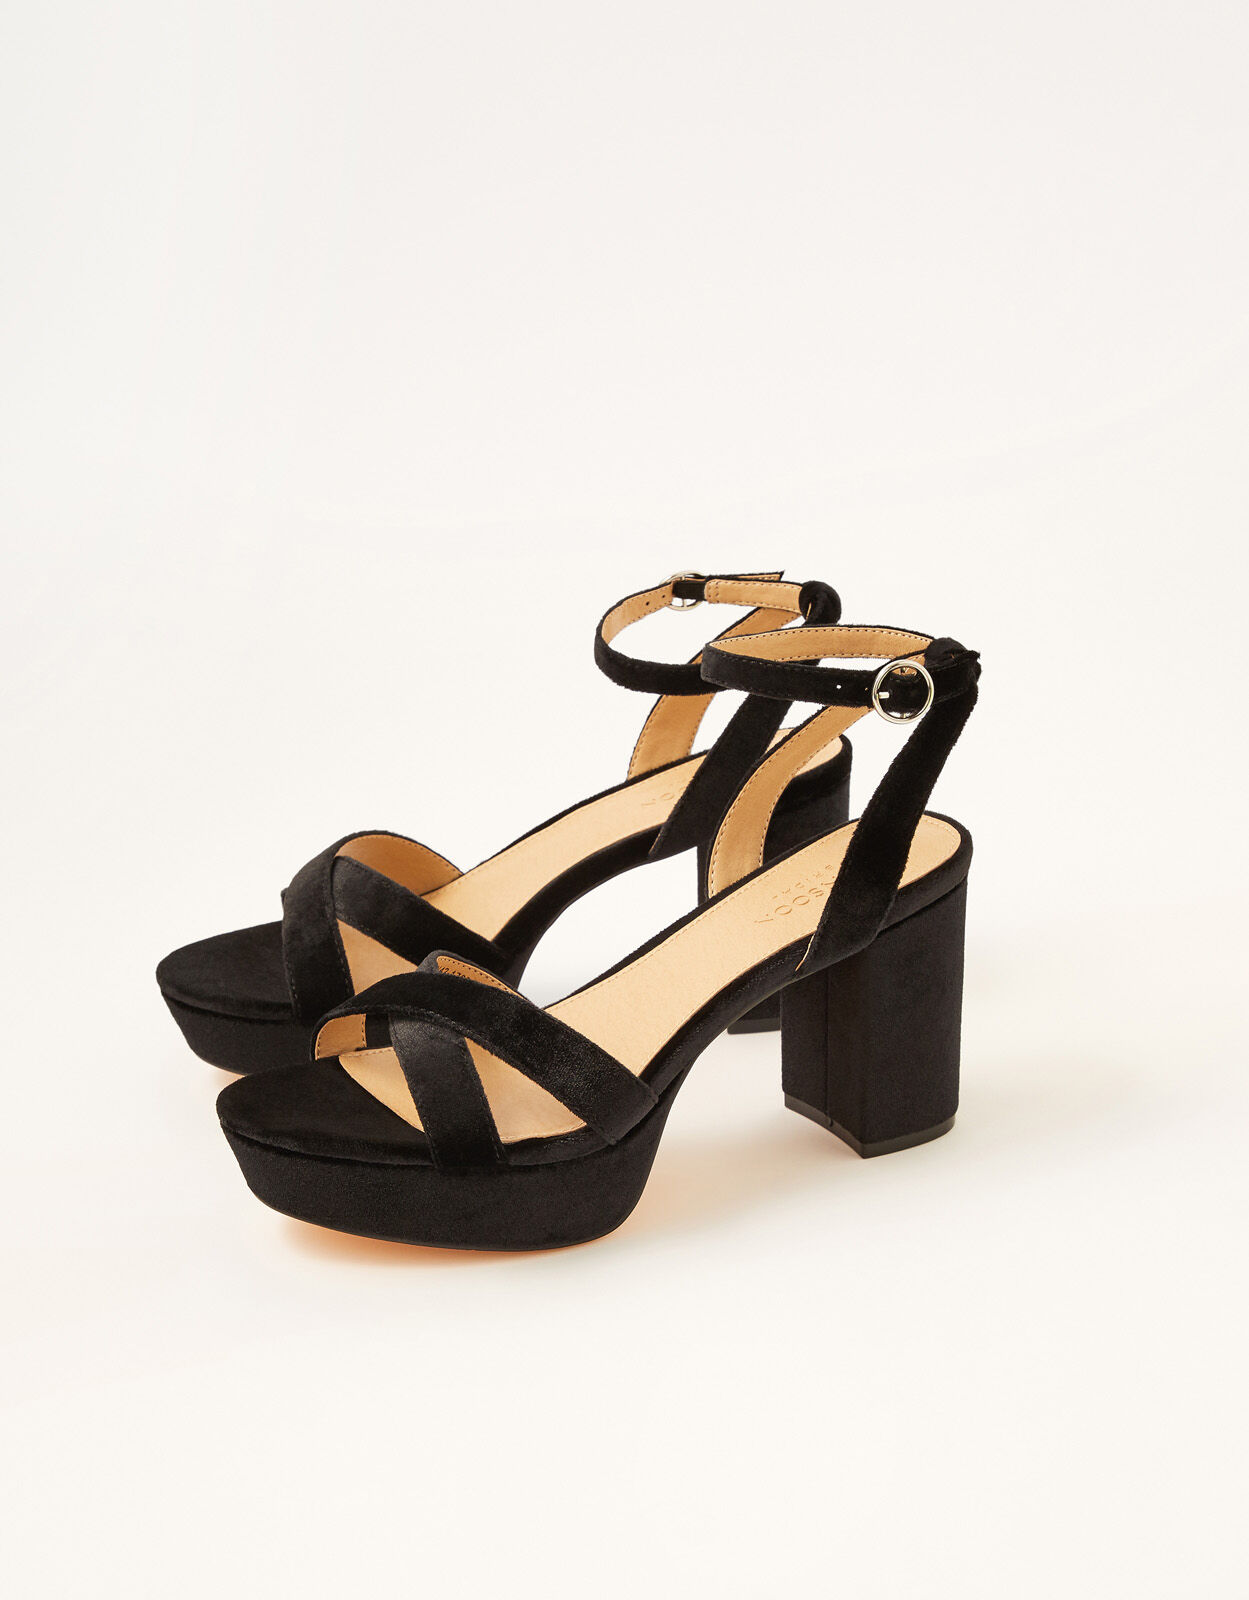 velvet black platform heels